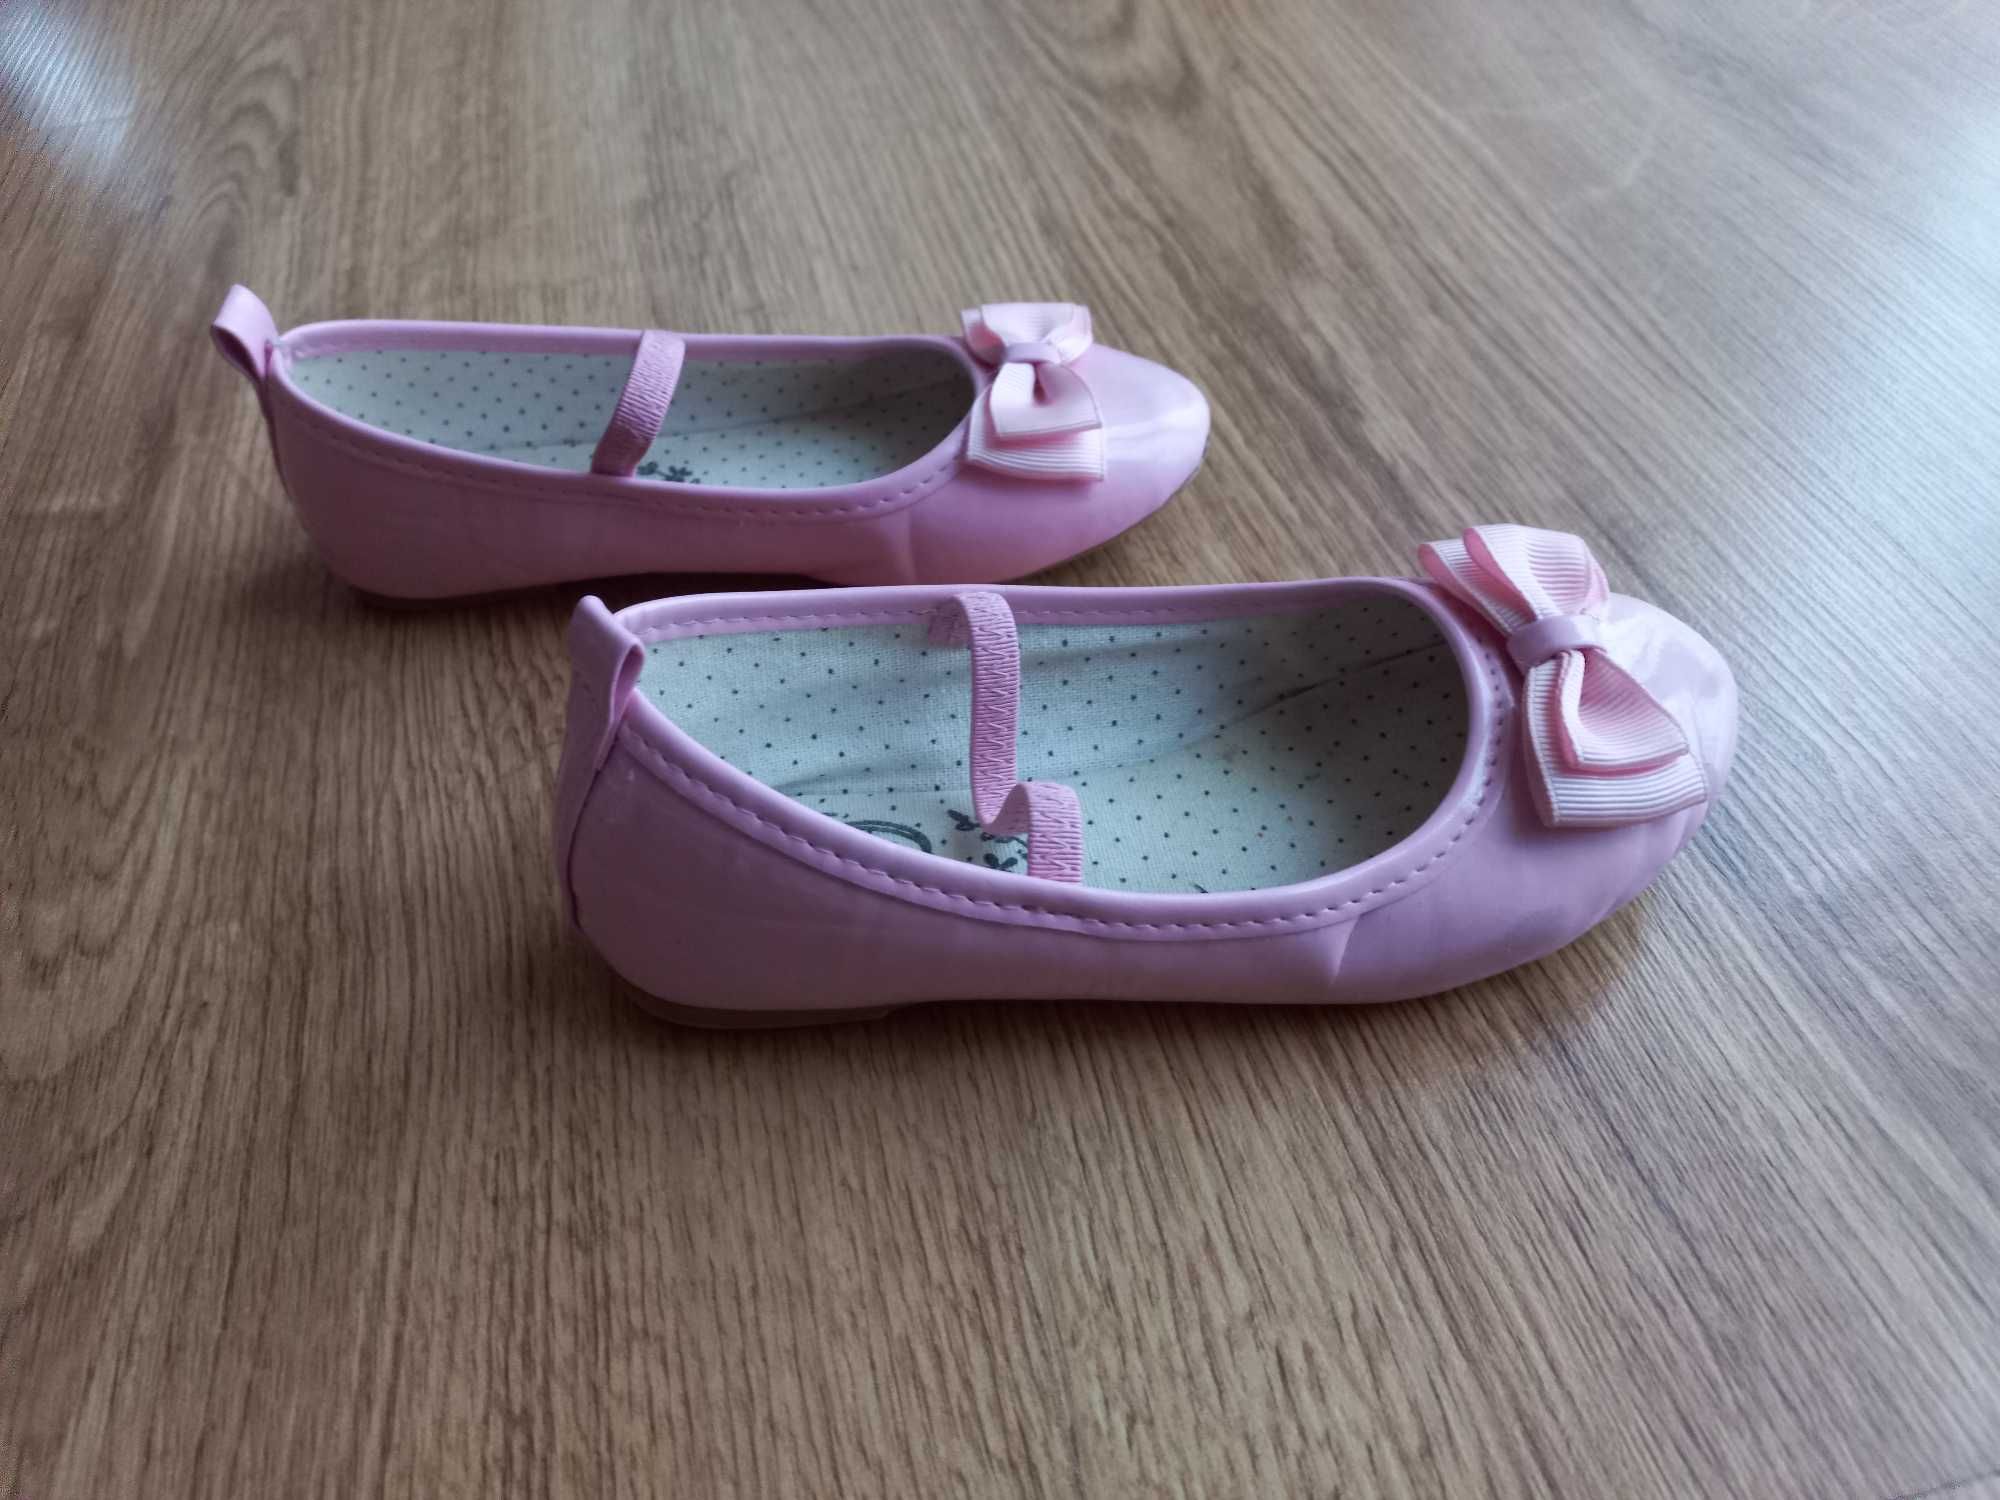 Buty Pantofle Ciapki roz. 27